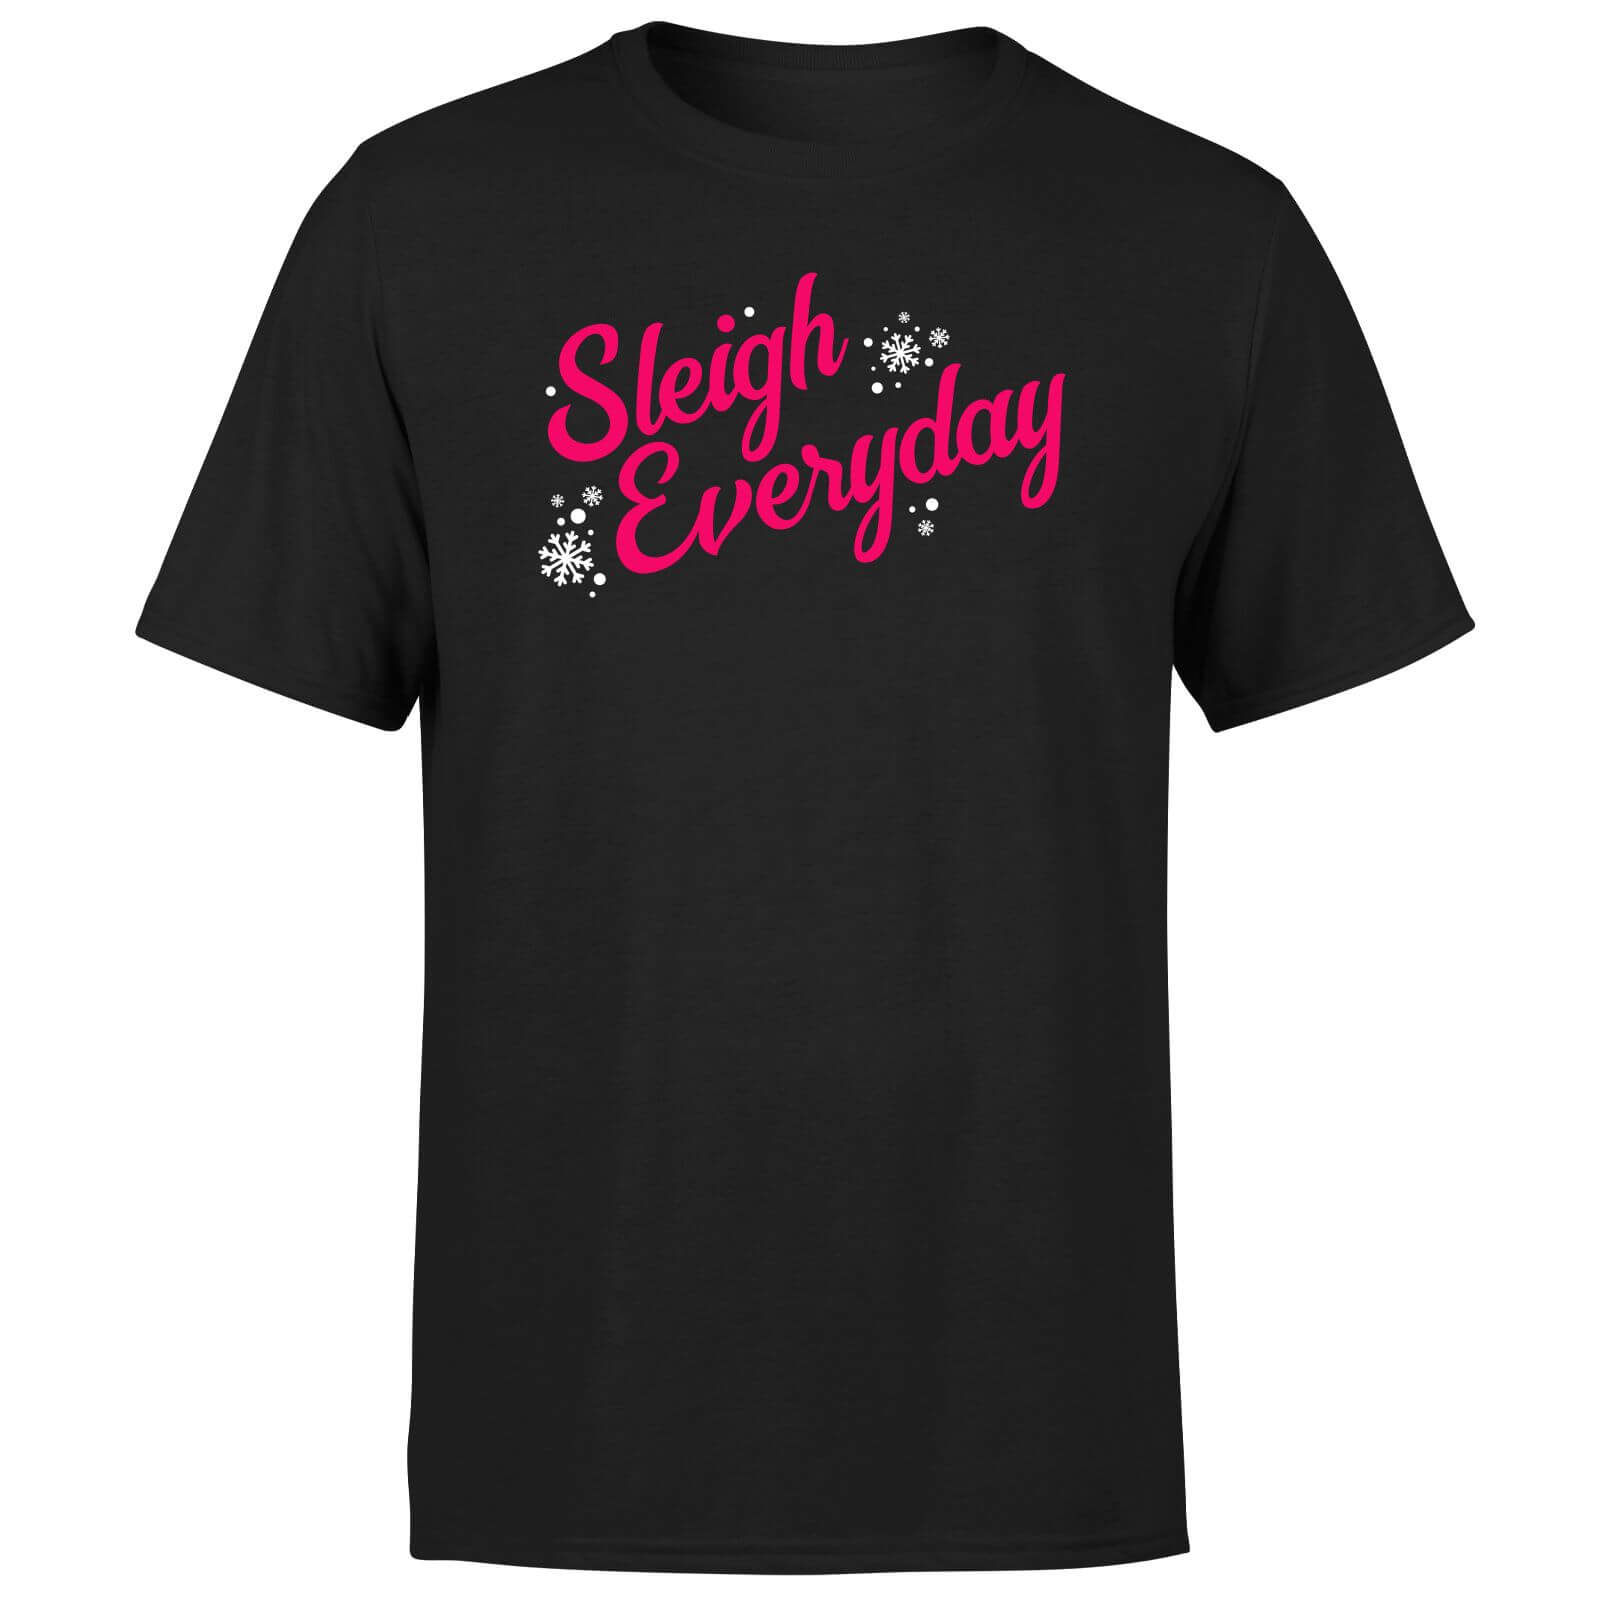 Sleigh Everyday Men's T-Shirt - Black - XS - Black